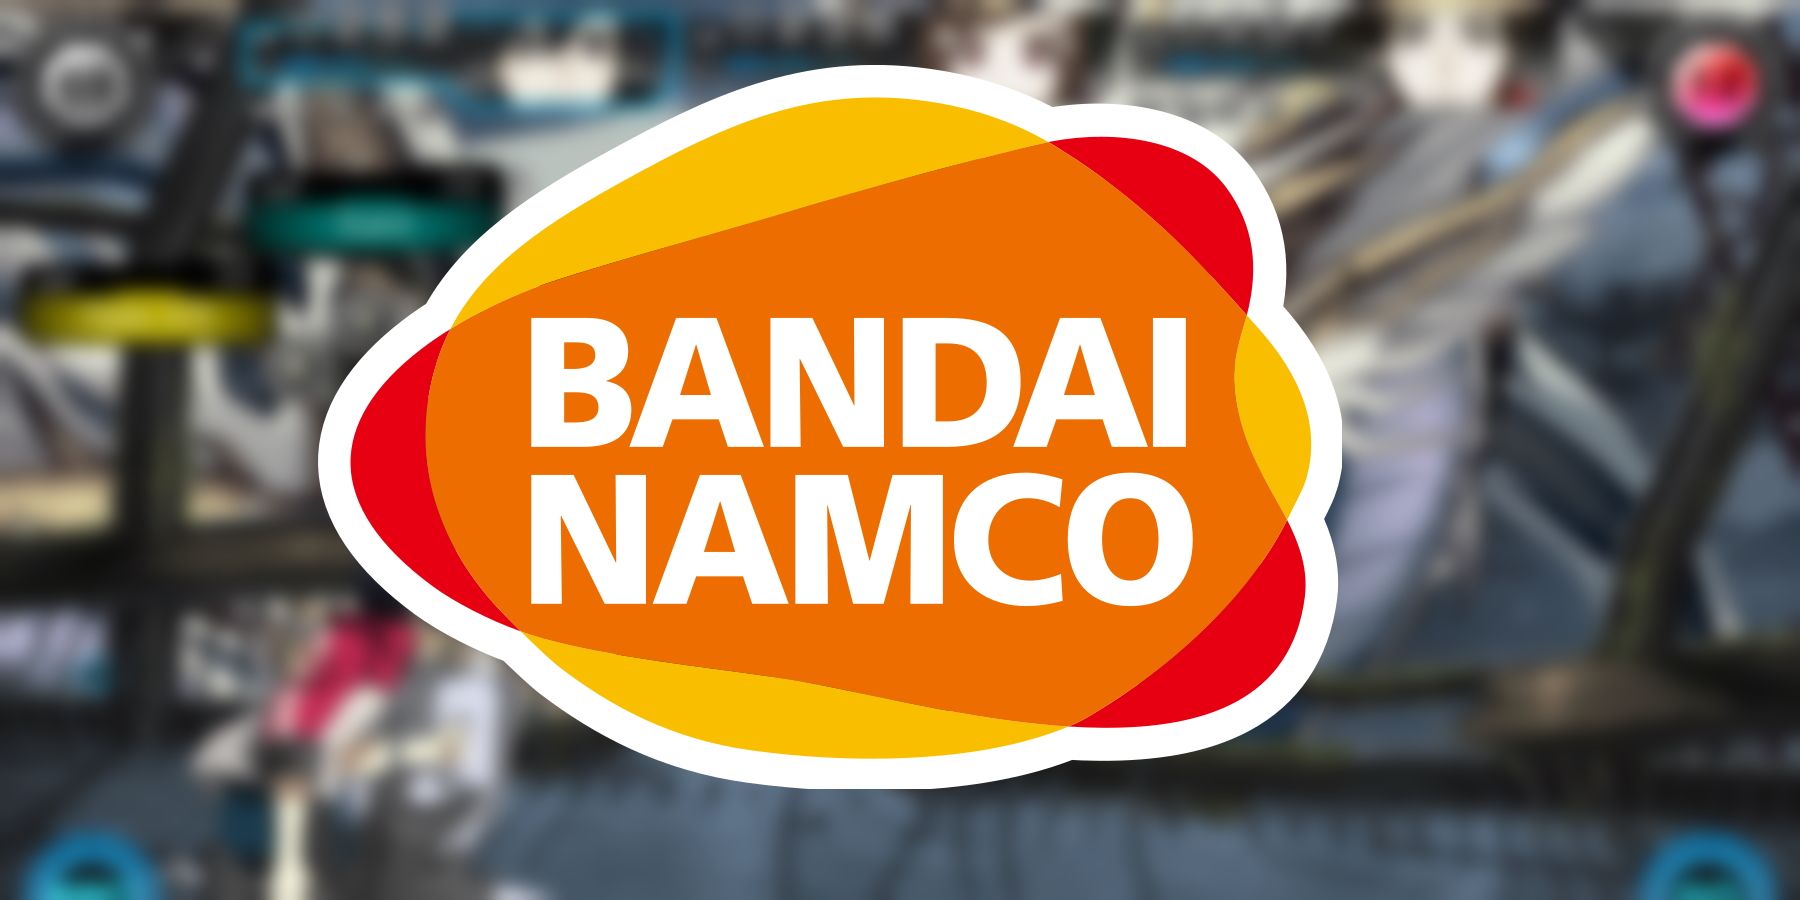 bandai namco steam rpg delisted with no warning